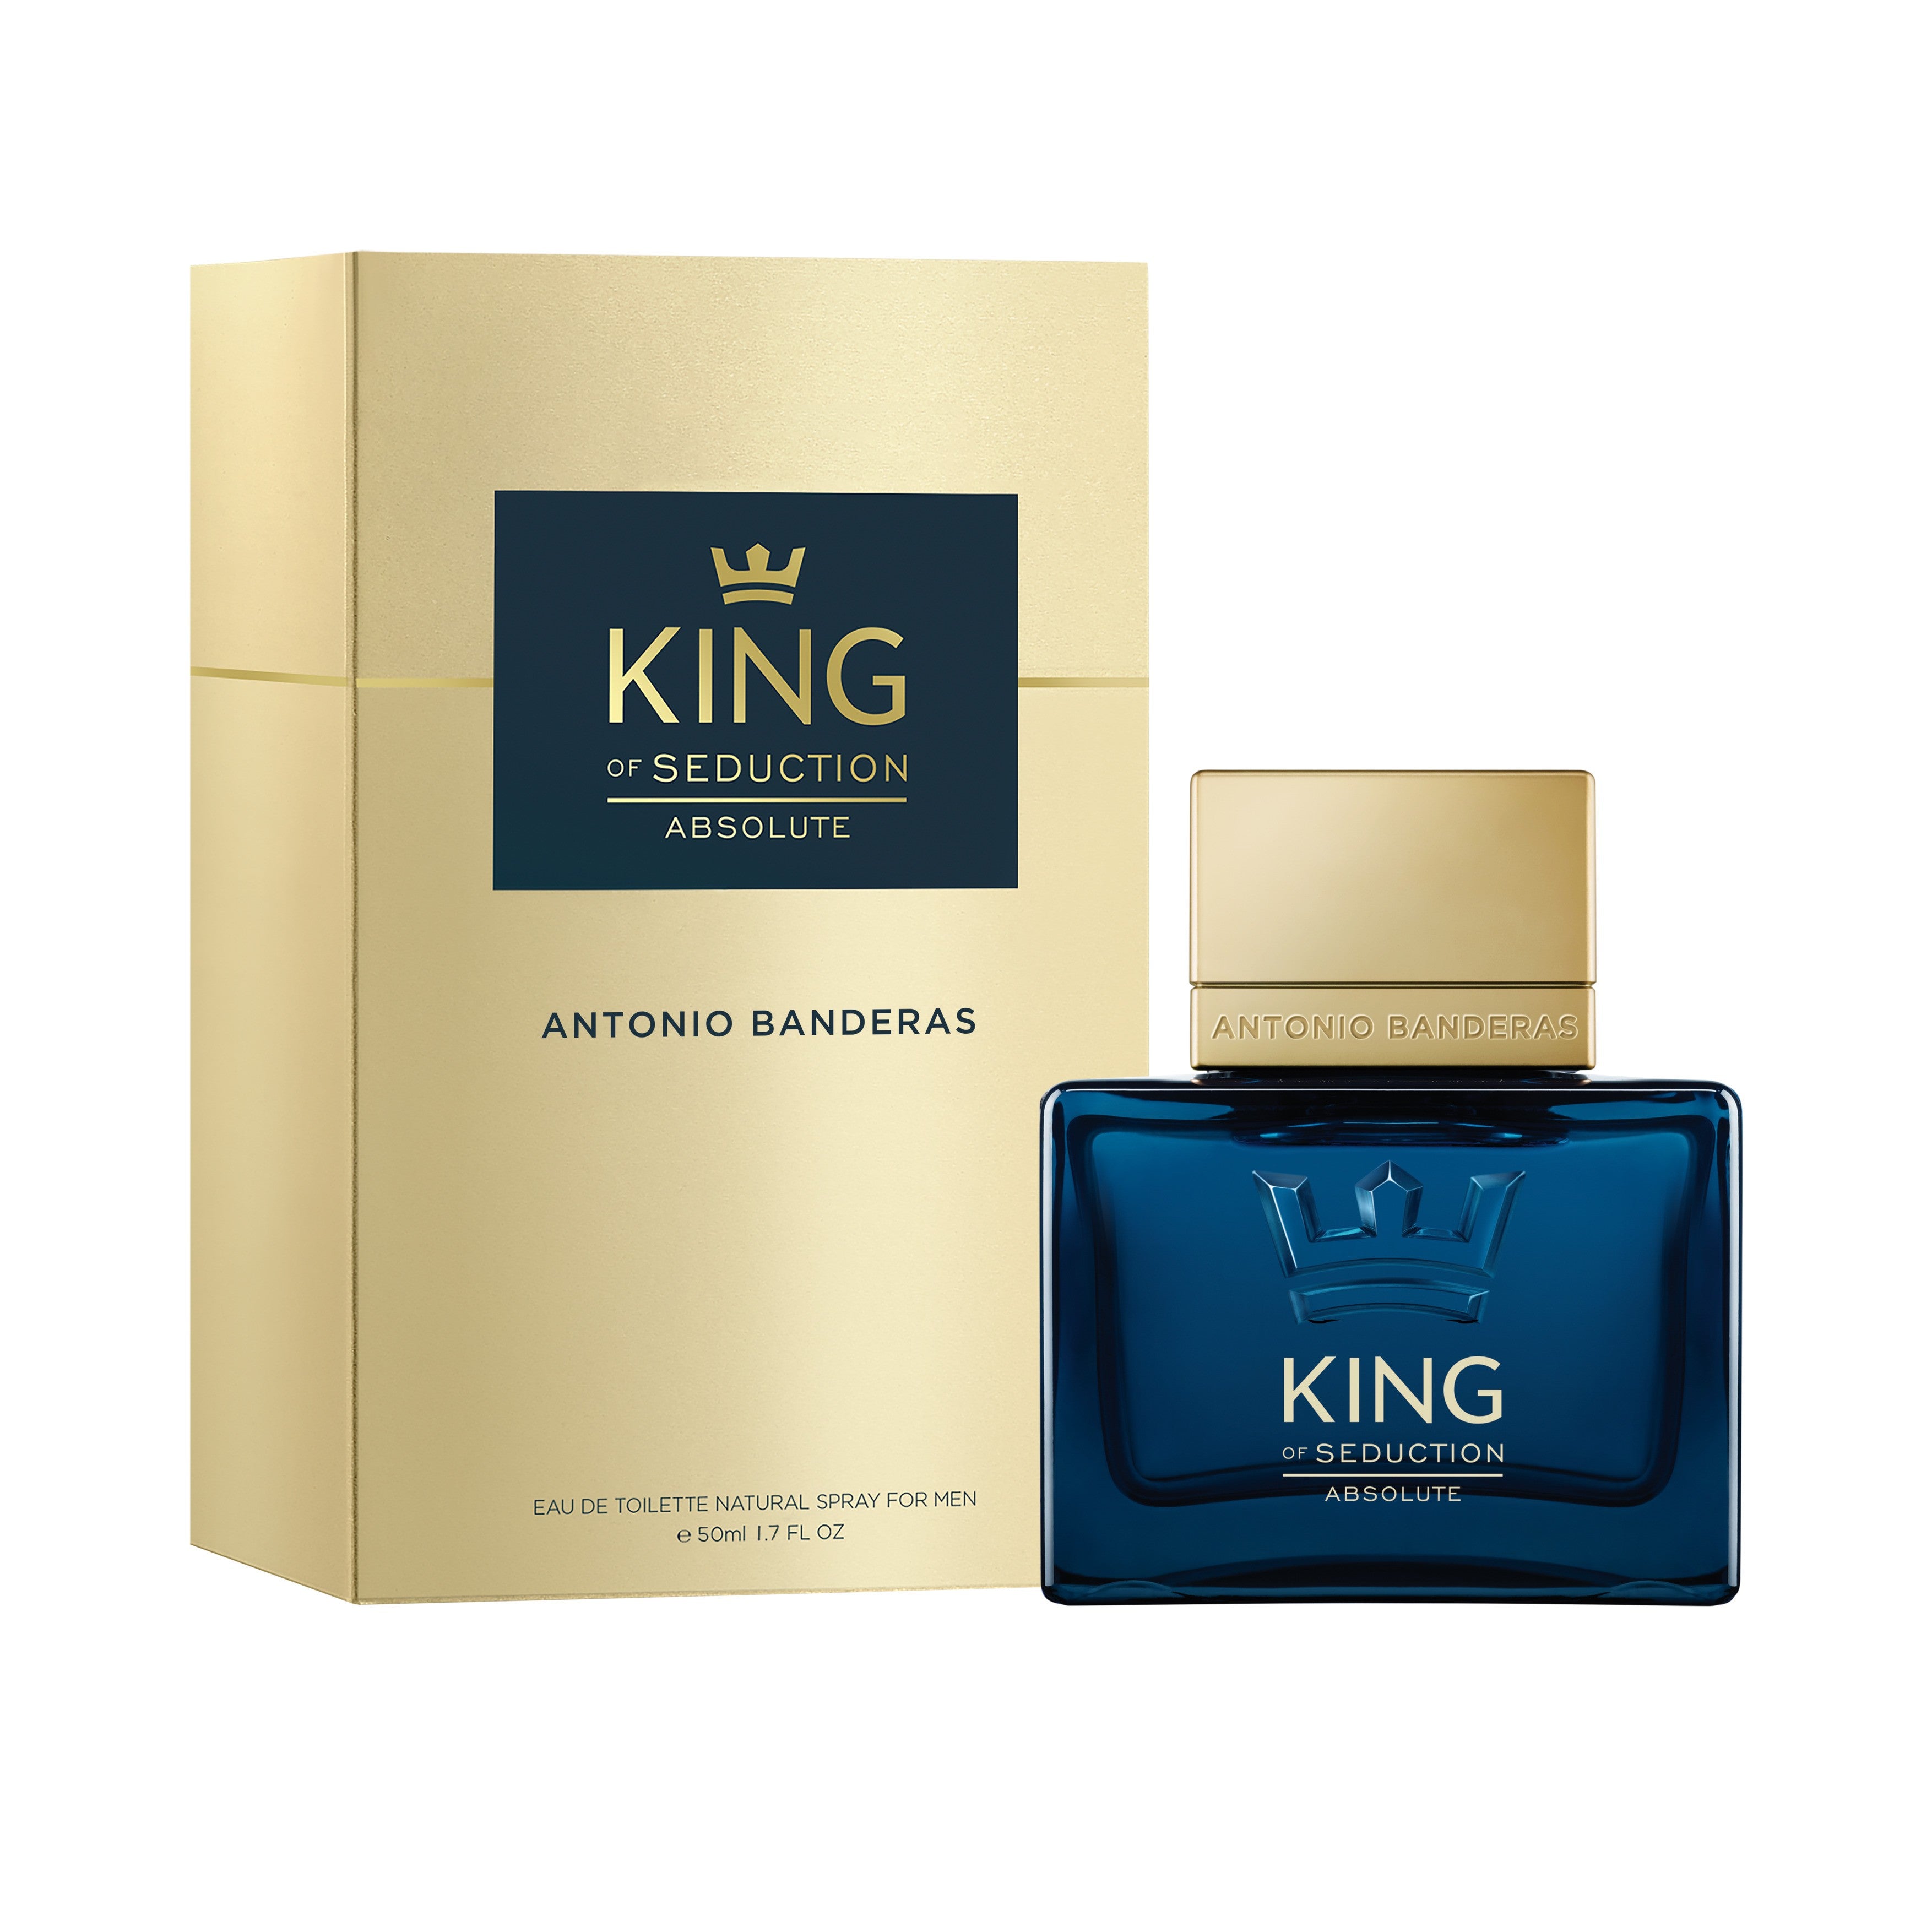 COSMETICOS-perfume-king-of-seduction-absolute-cab-50ml